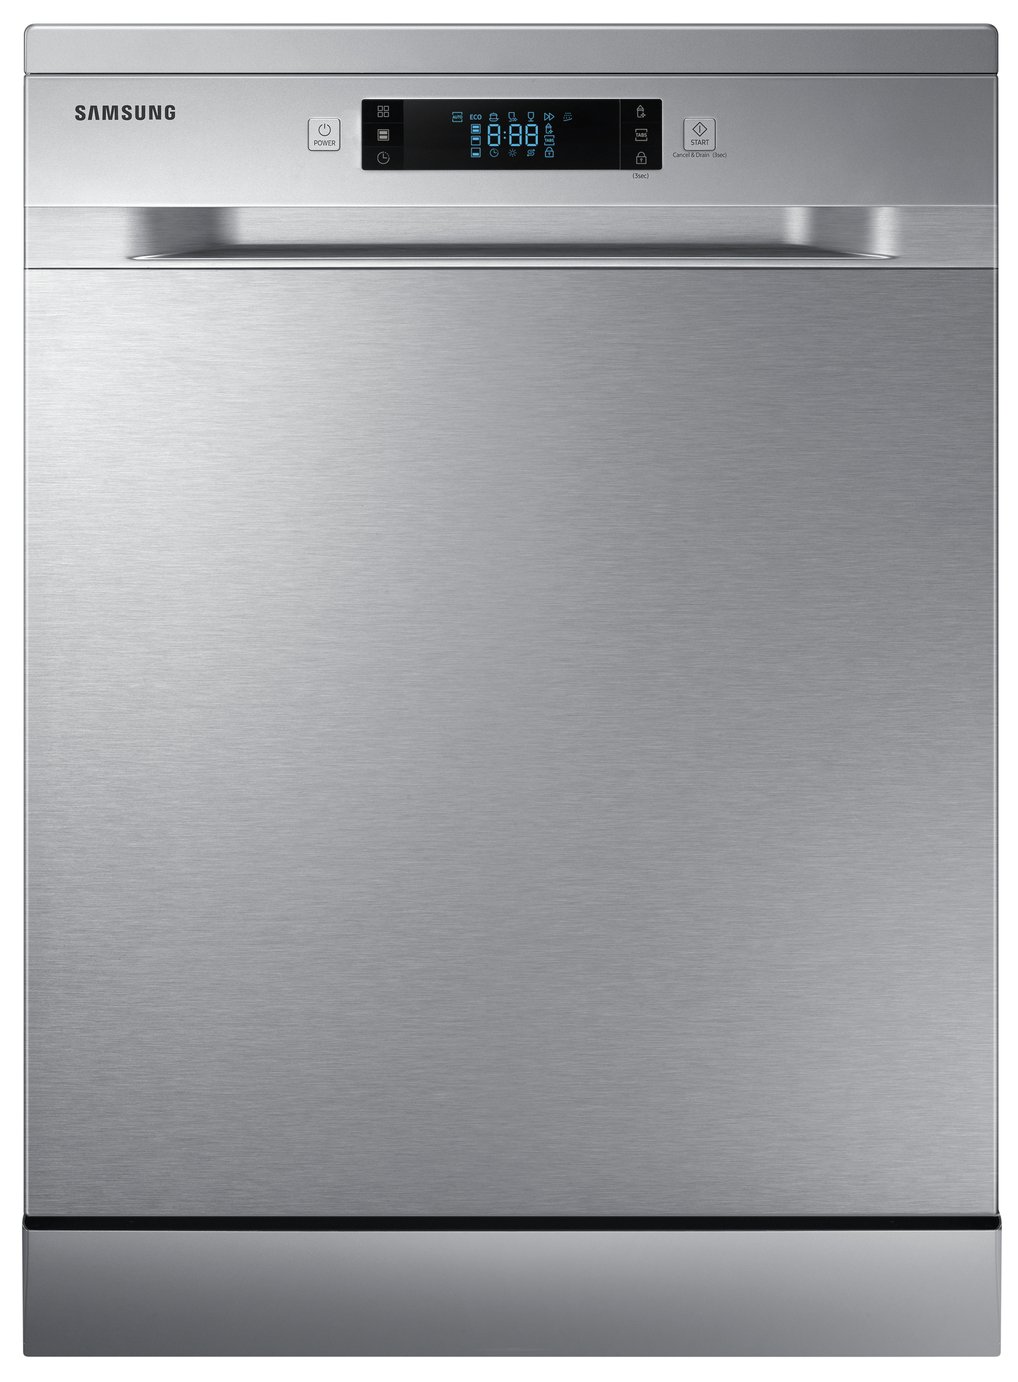 Samsung Series 6 DW60M6050FS Full Size Dishwasher - Silver